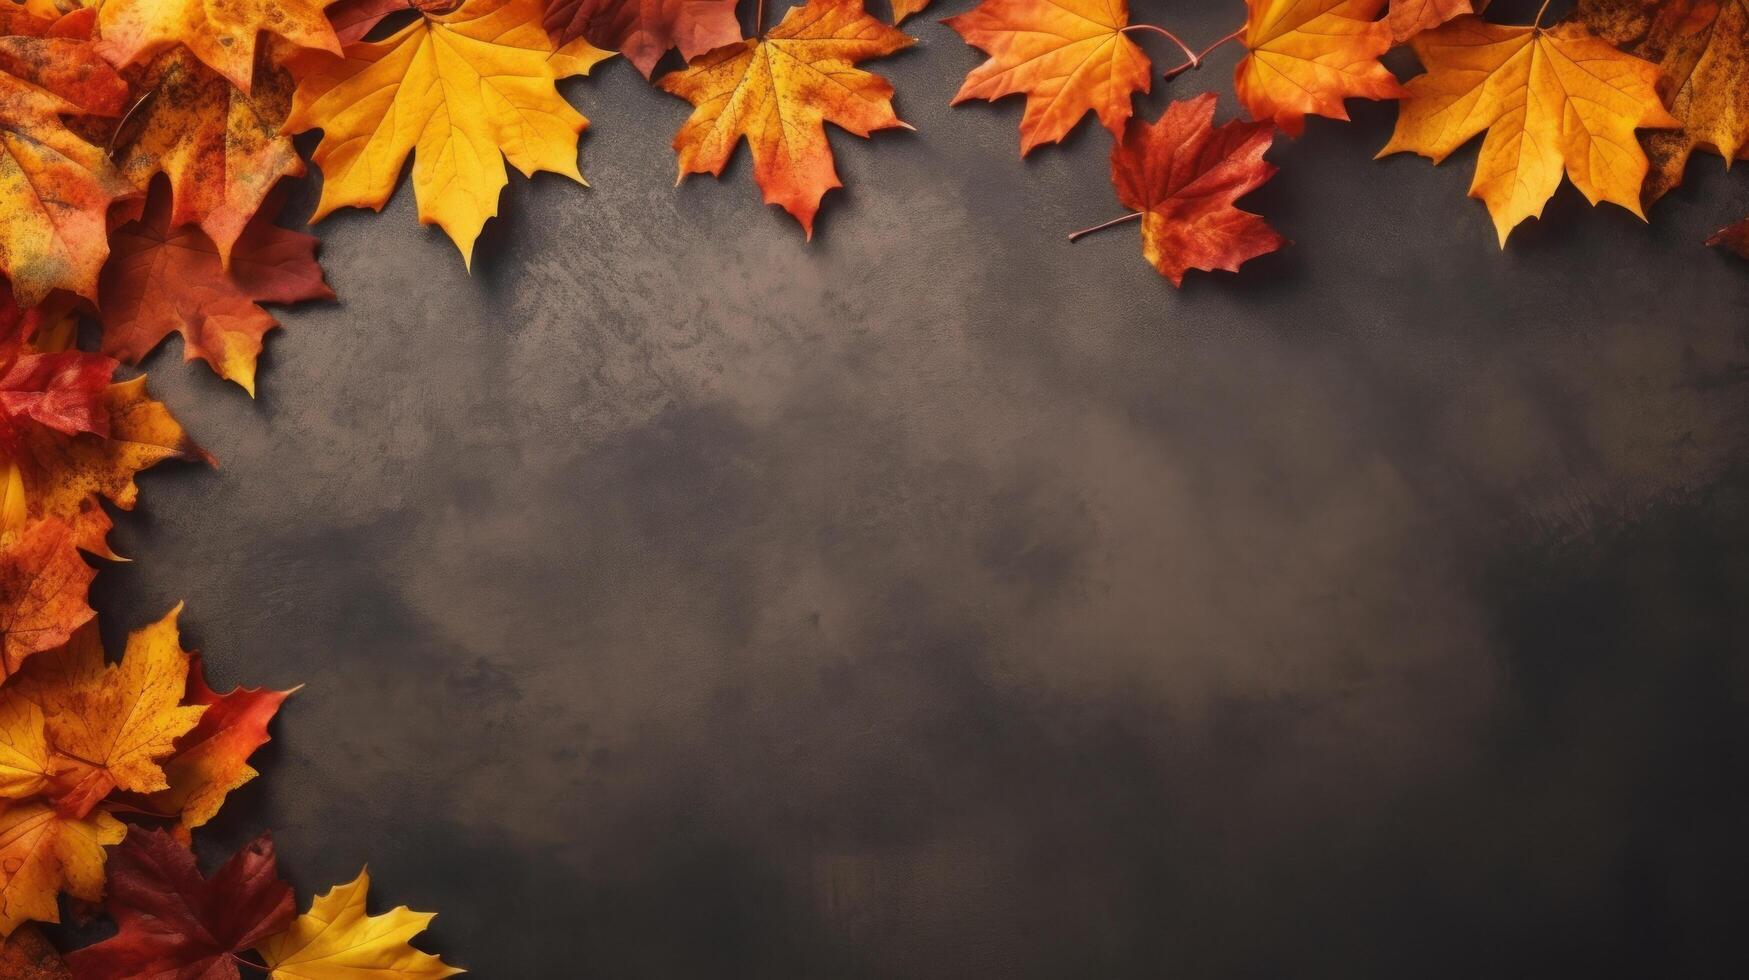 Autumn Fall leaves background. Illustration photo